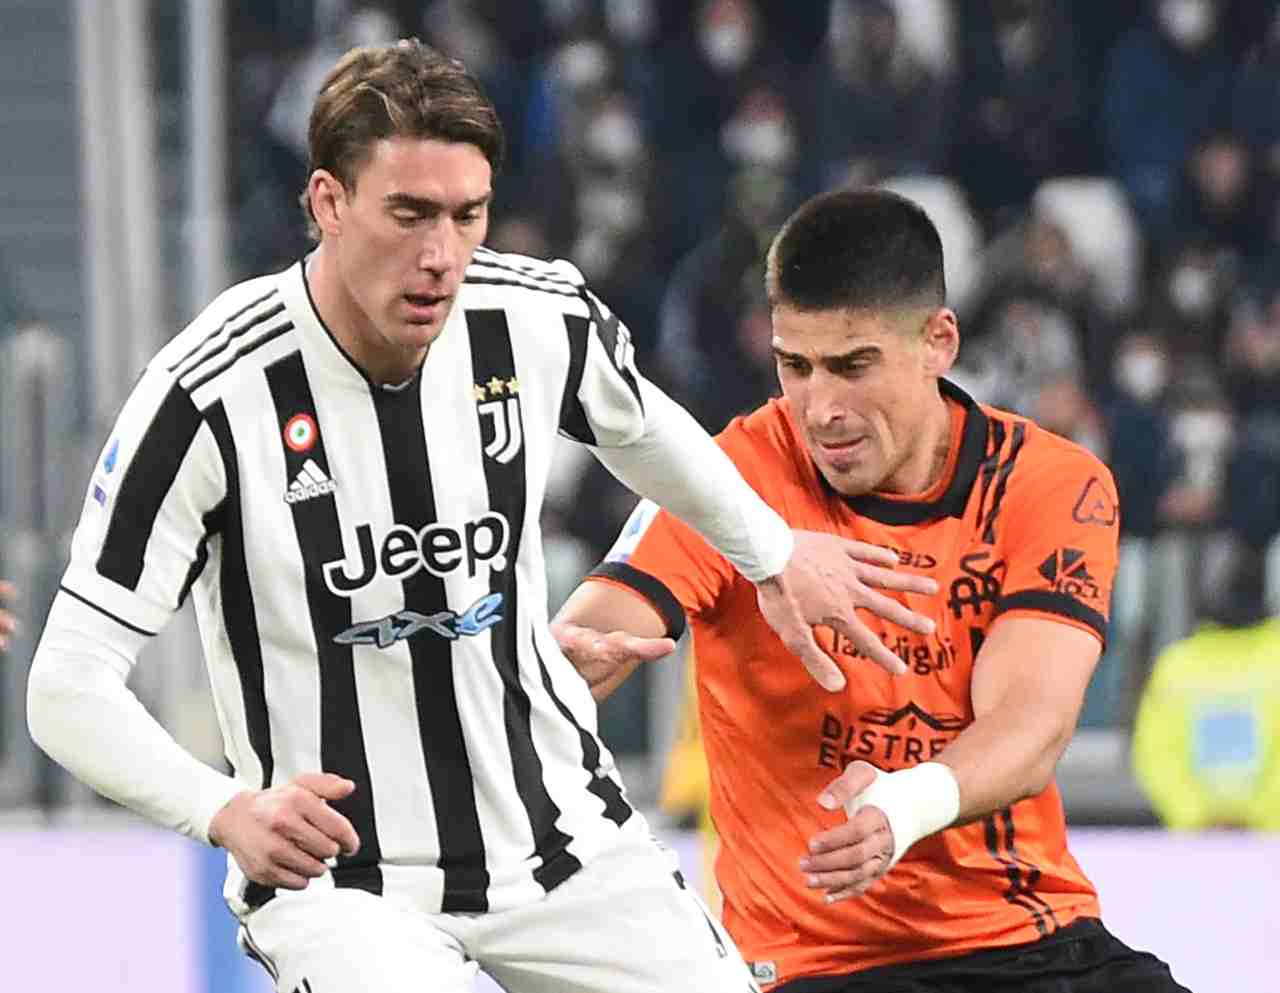 Juventus-Spezia, Serie A - stopandgoal.com (La Presse)